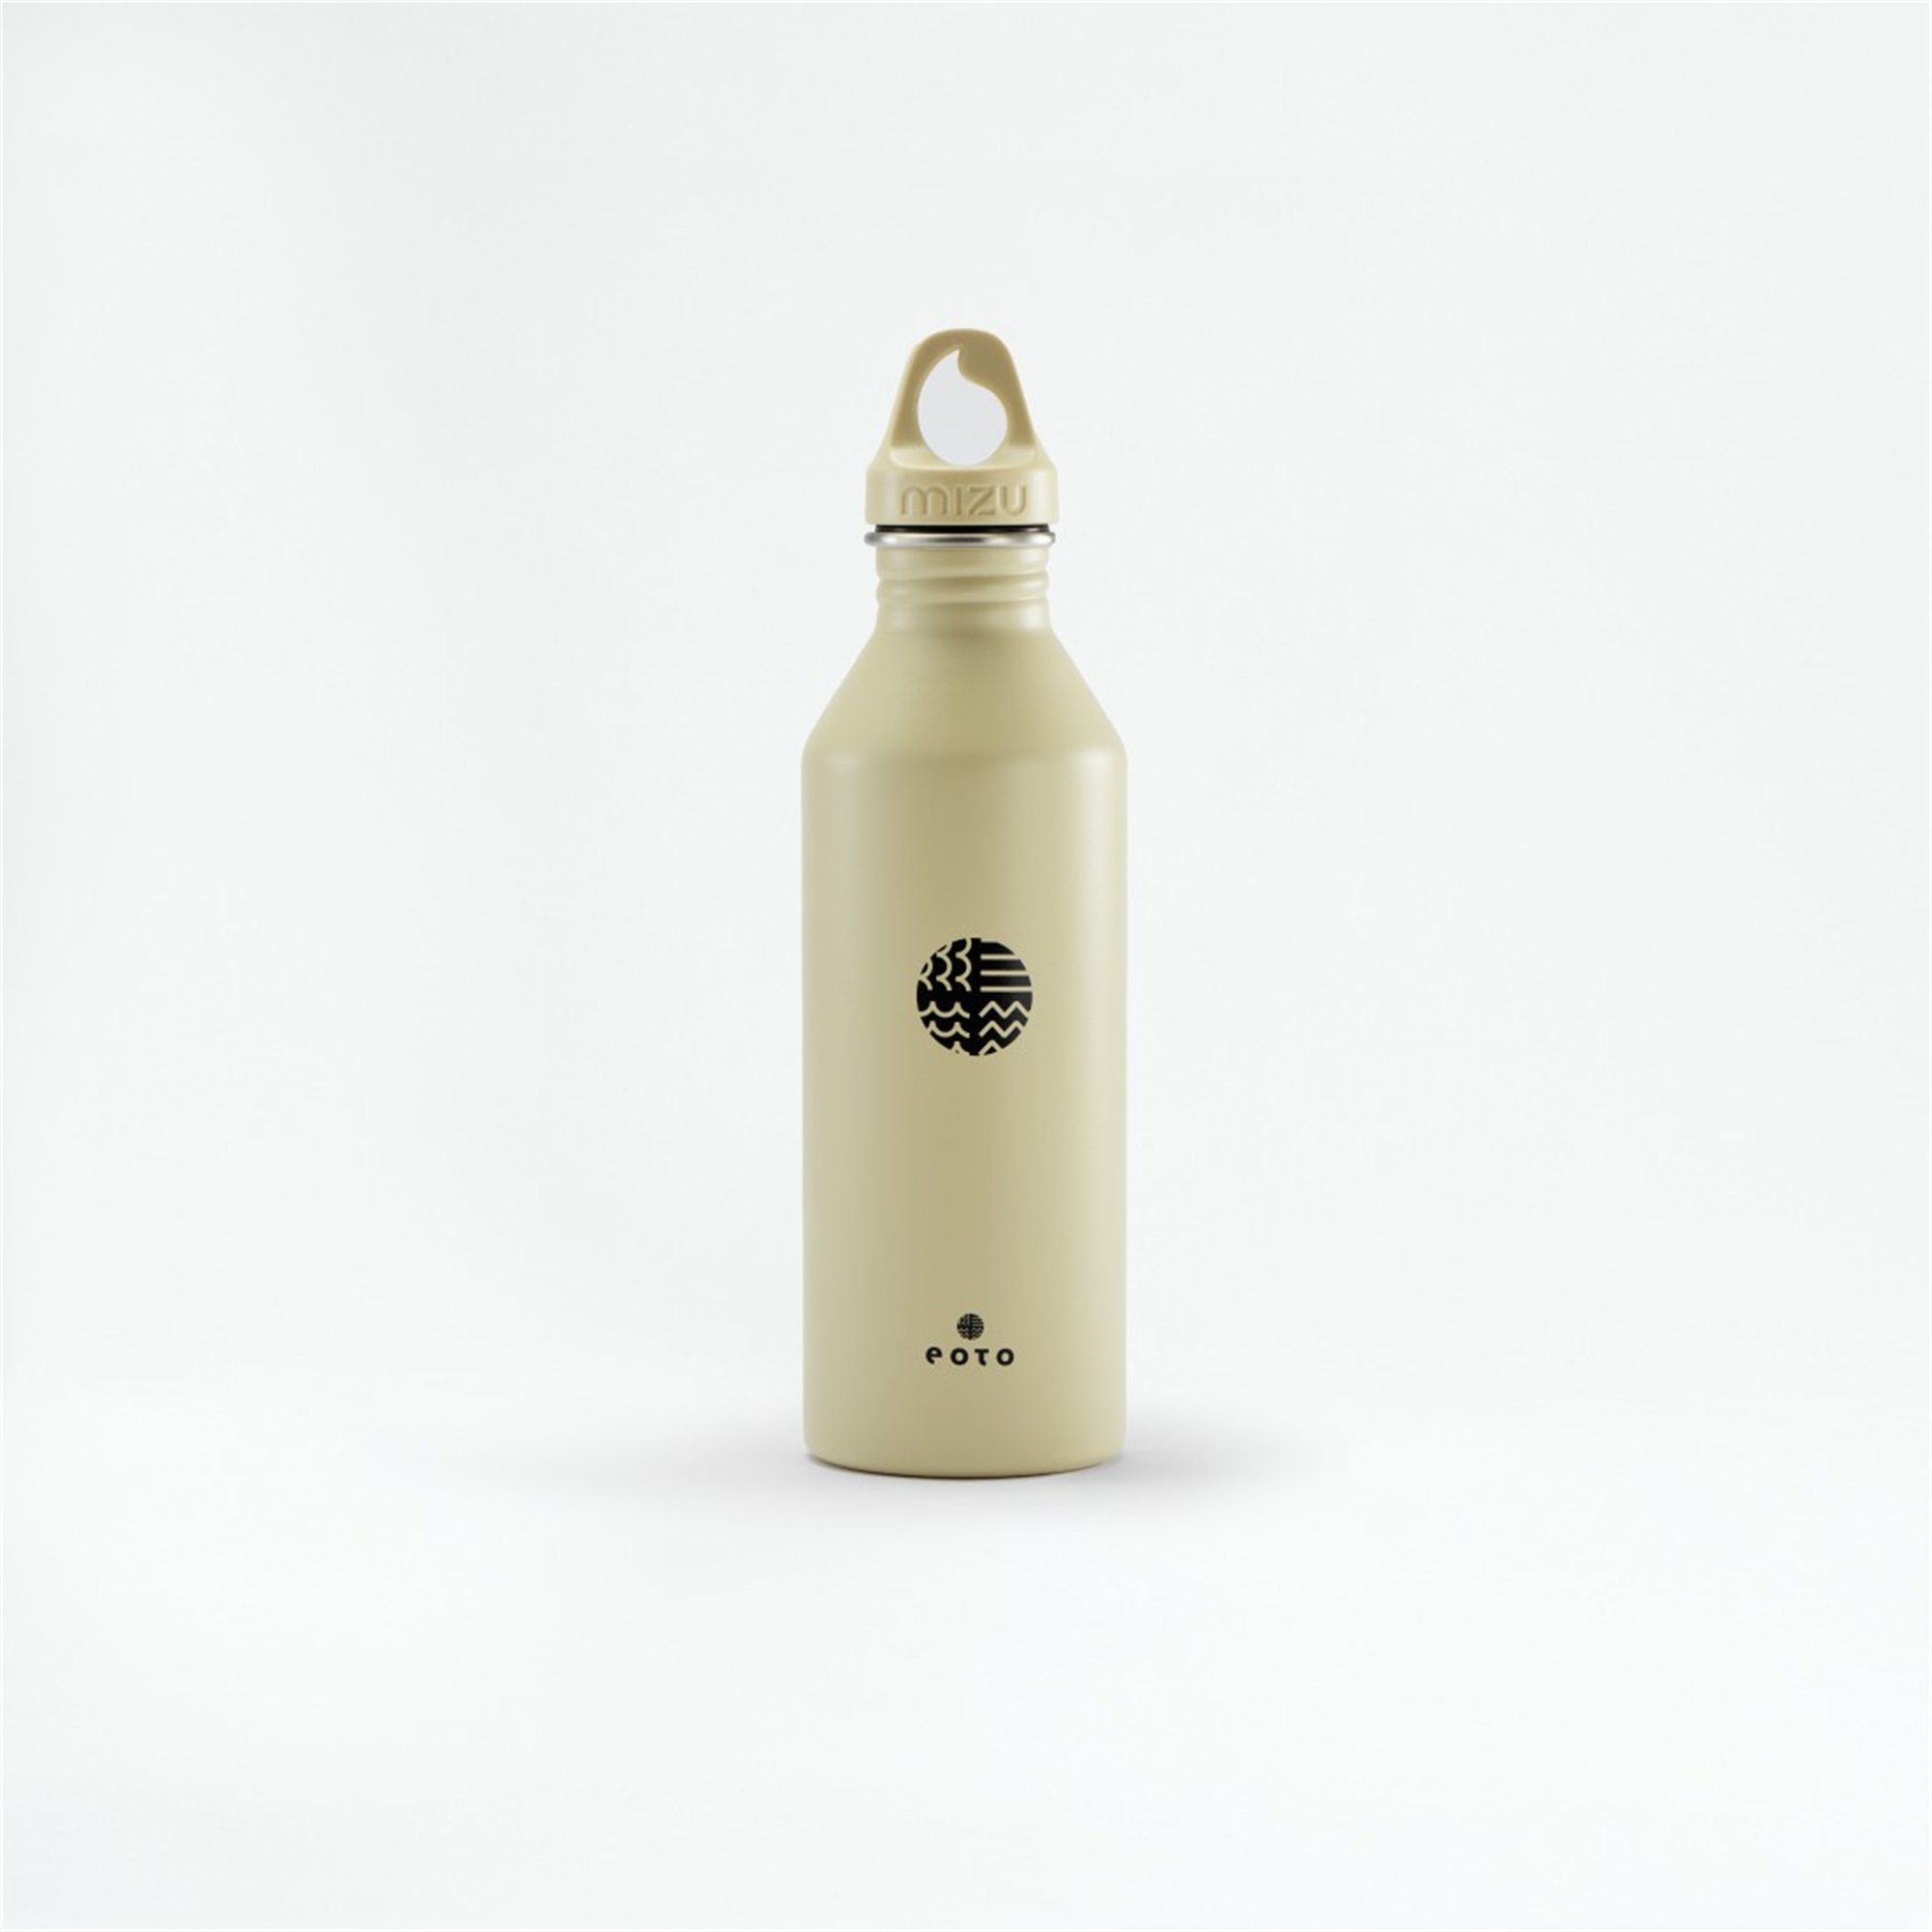 Trinkflasche Edelstahl, JERRY:CAN, BPA-frei, eoto Beige 0,75l